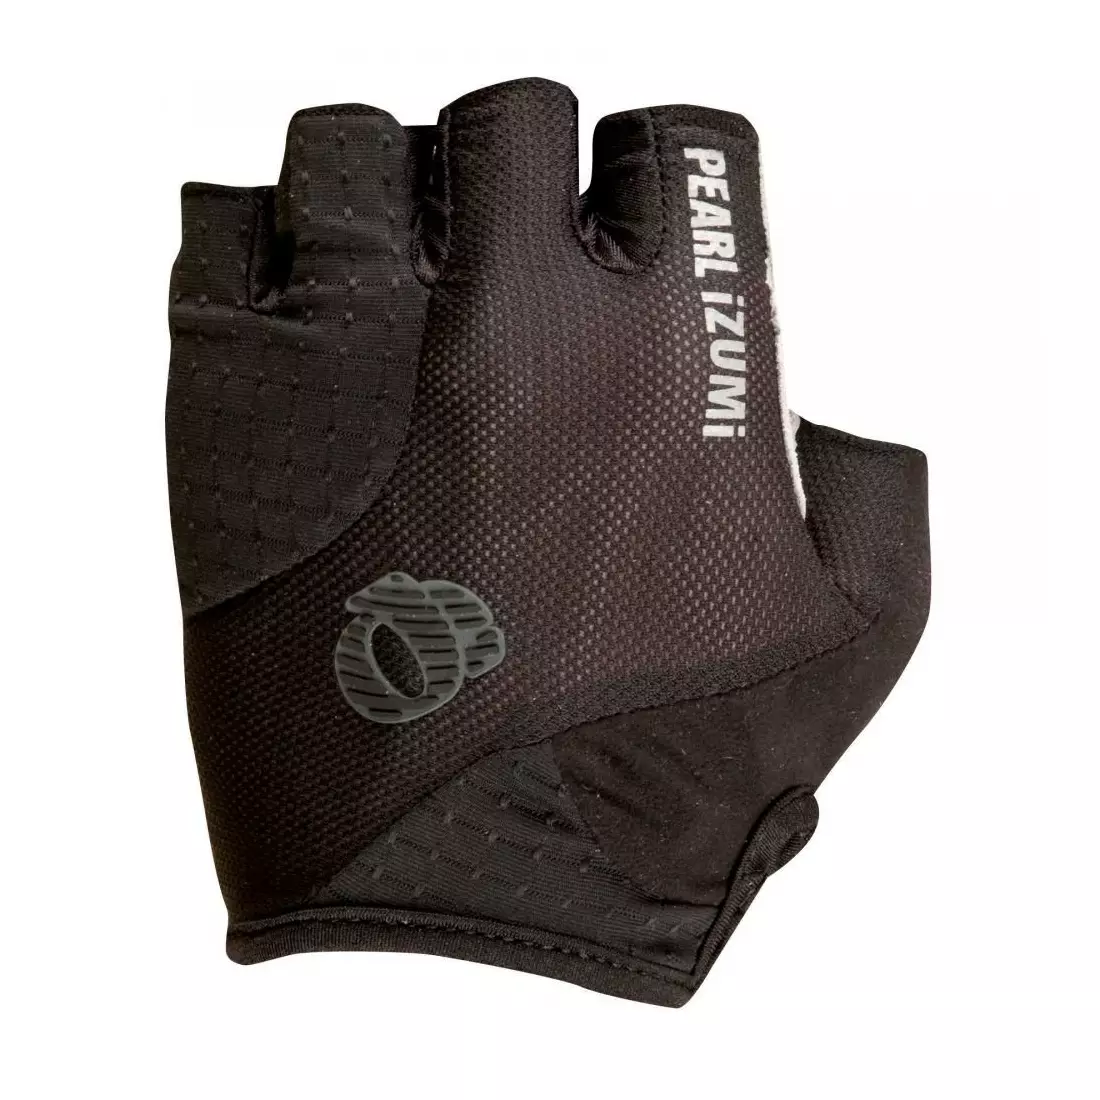 PEARL IZUMI ELITE men's cycling gloves, black, 14141305-021